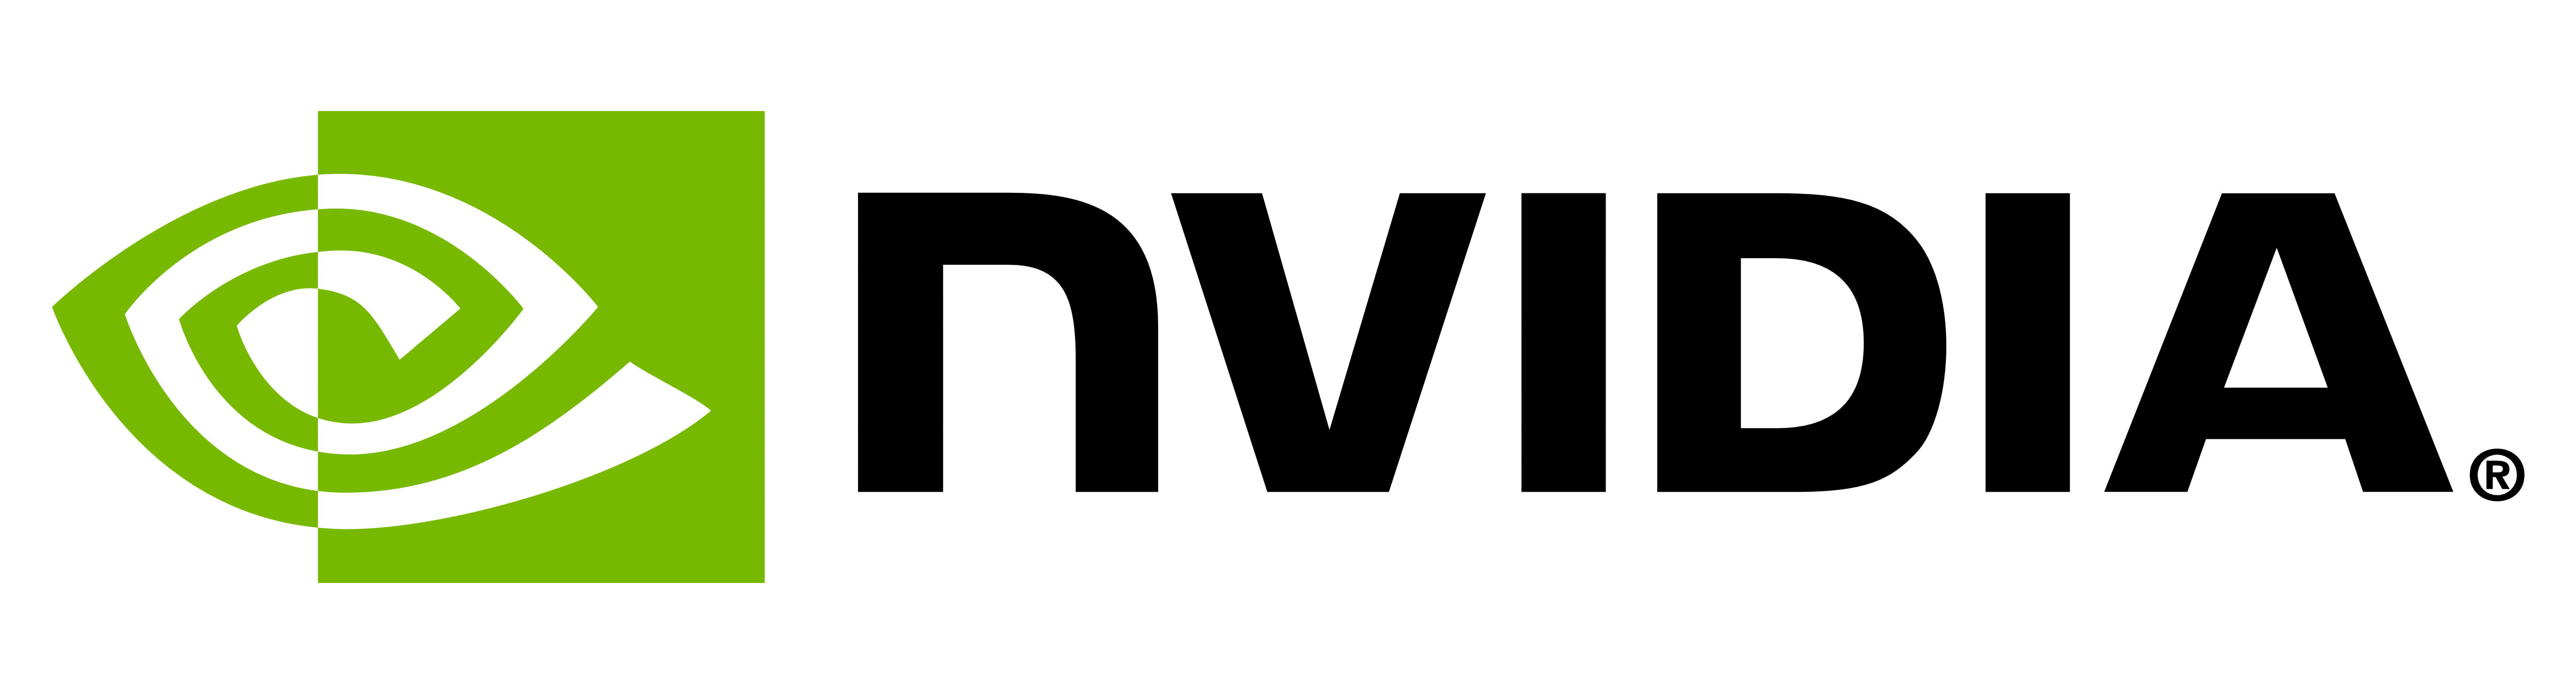 NVIDIA ロゴとシンボルの意味 |歴史と進化